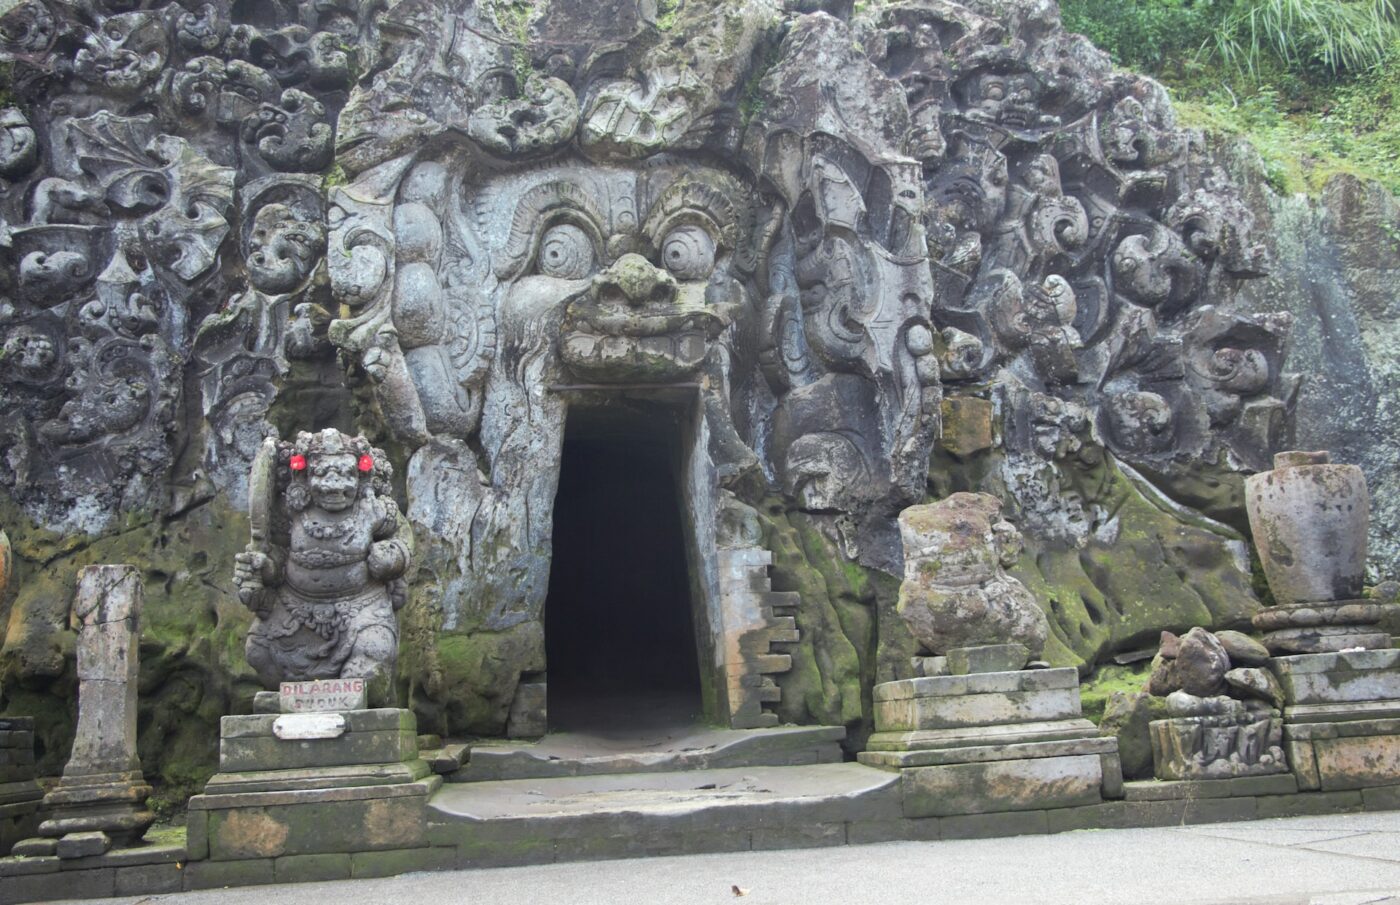 Stone statues in Goa Gajah Temple in Ubud